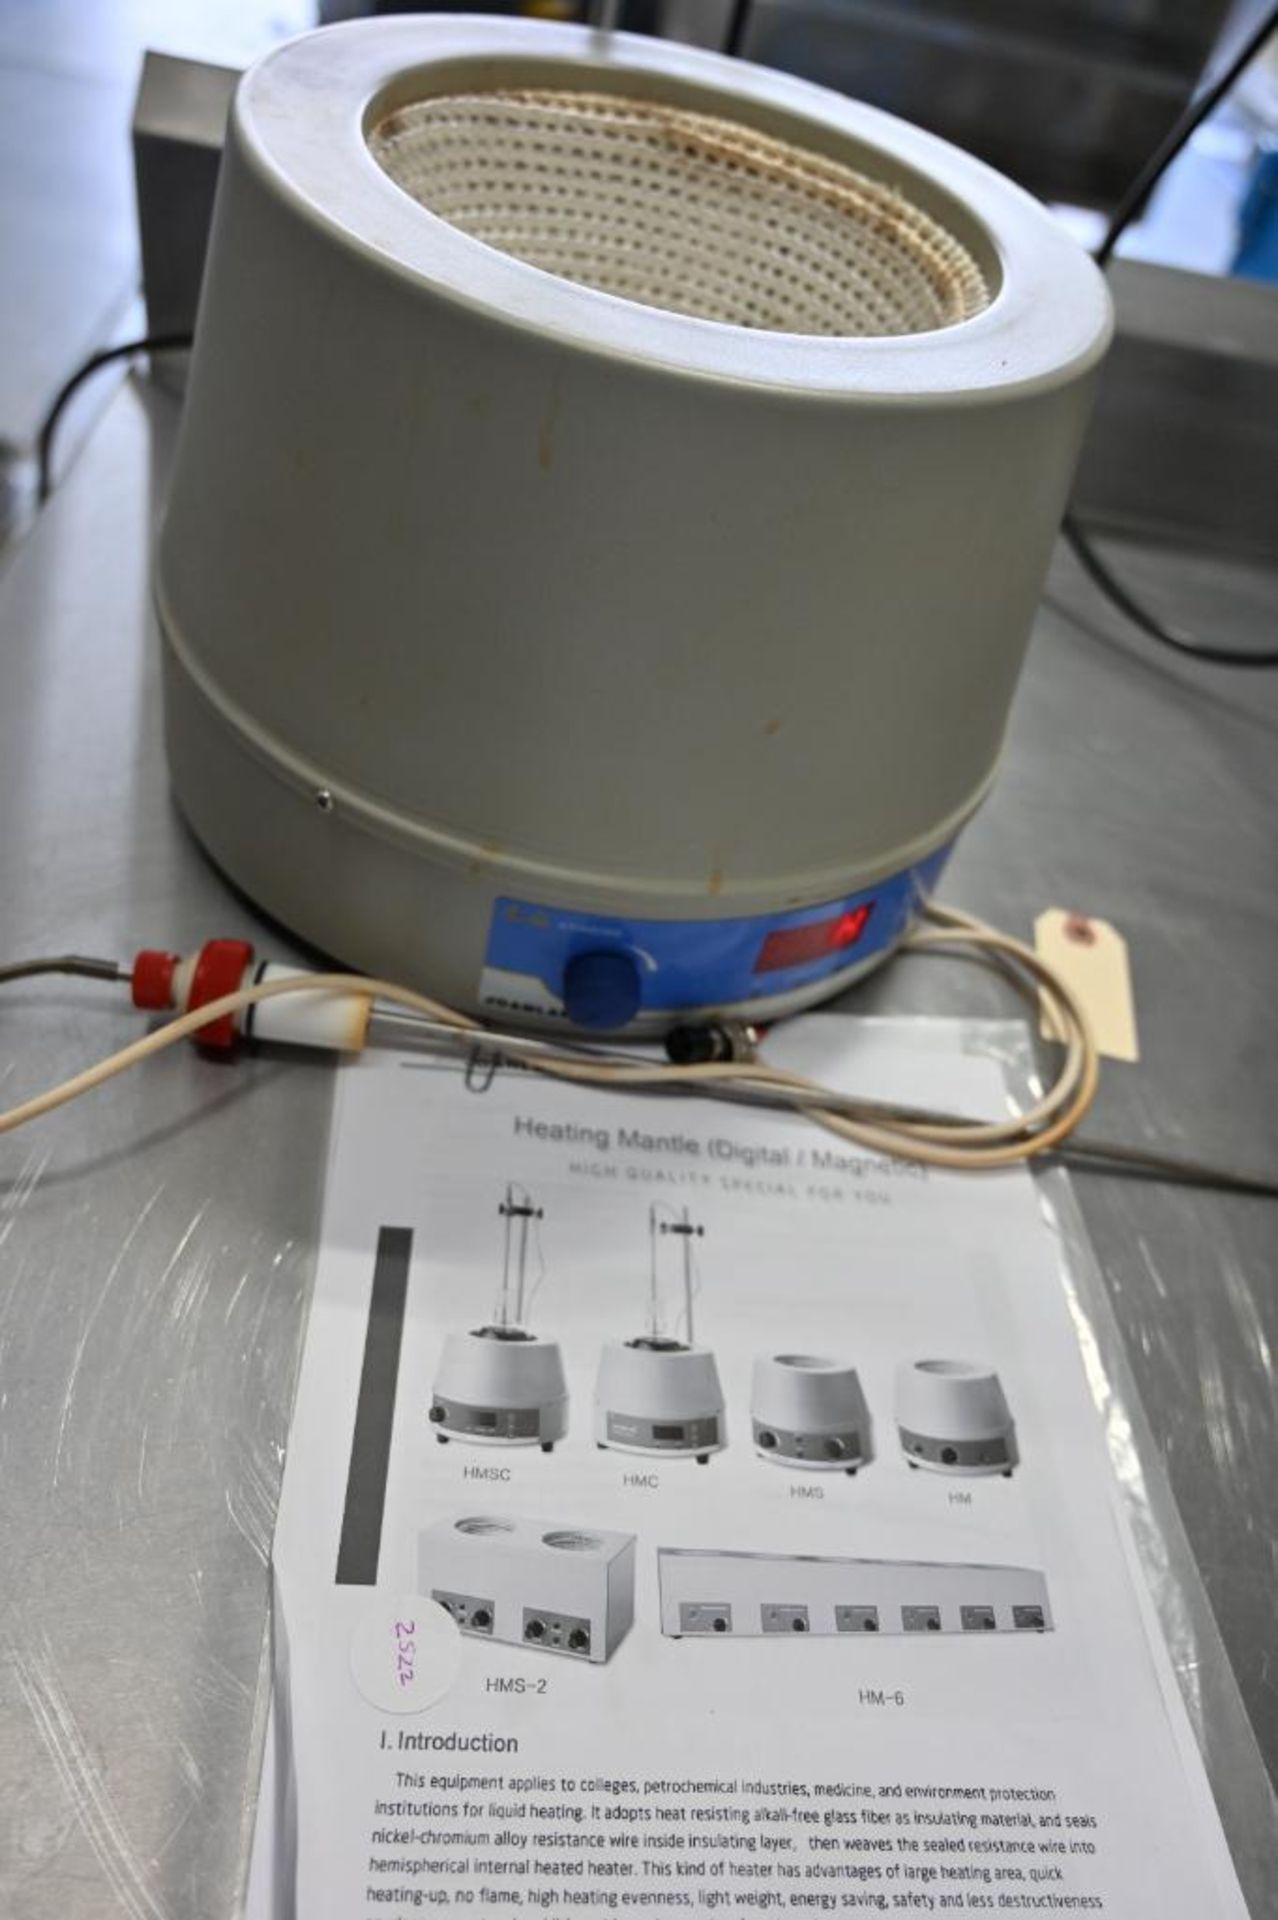 Joan Lab Heating Mantle model HMSC - Image 3 of 7